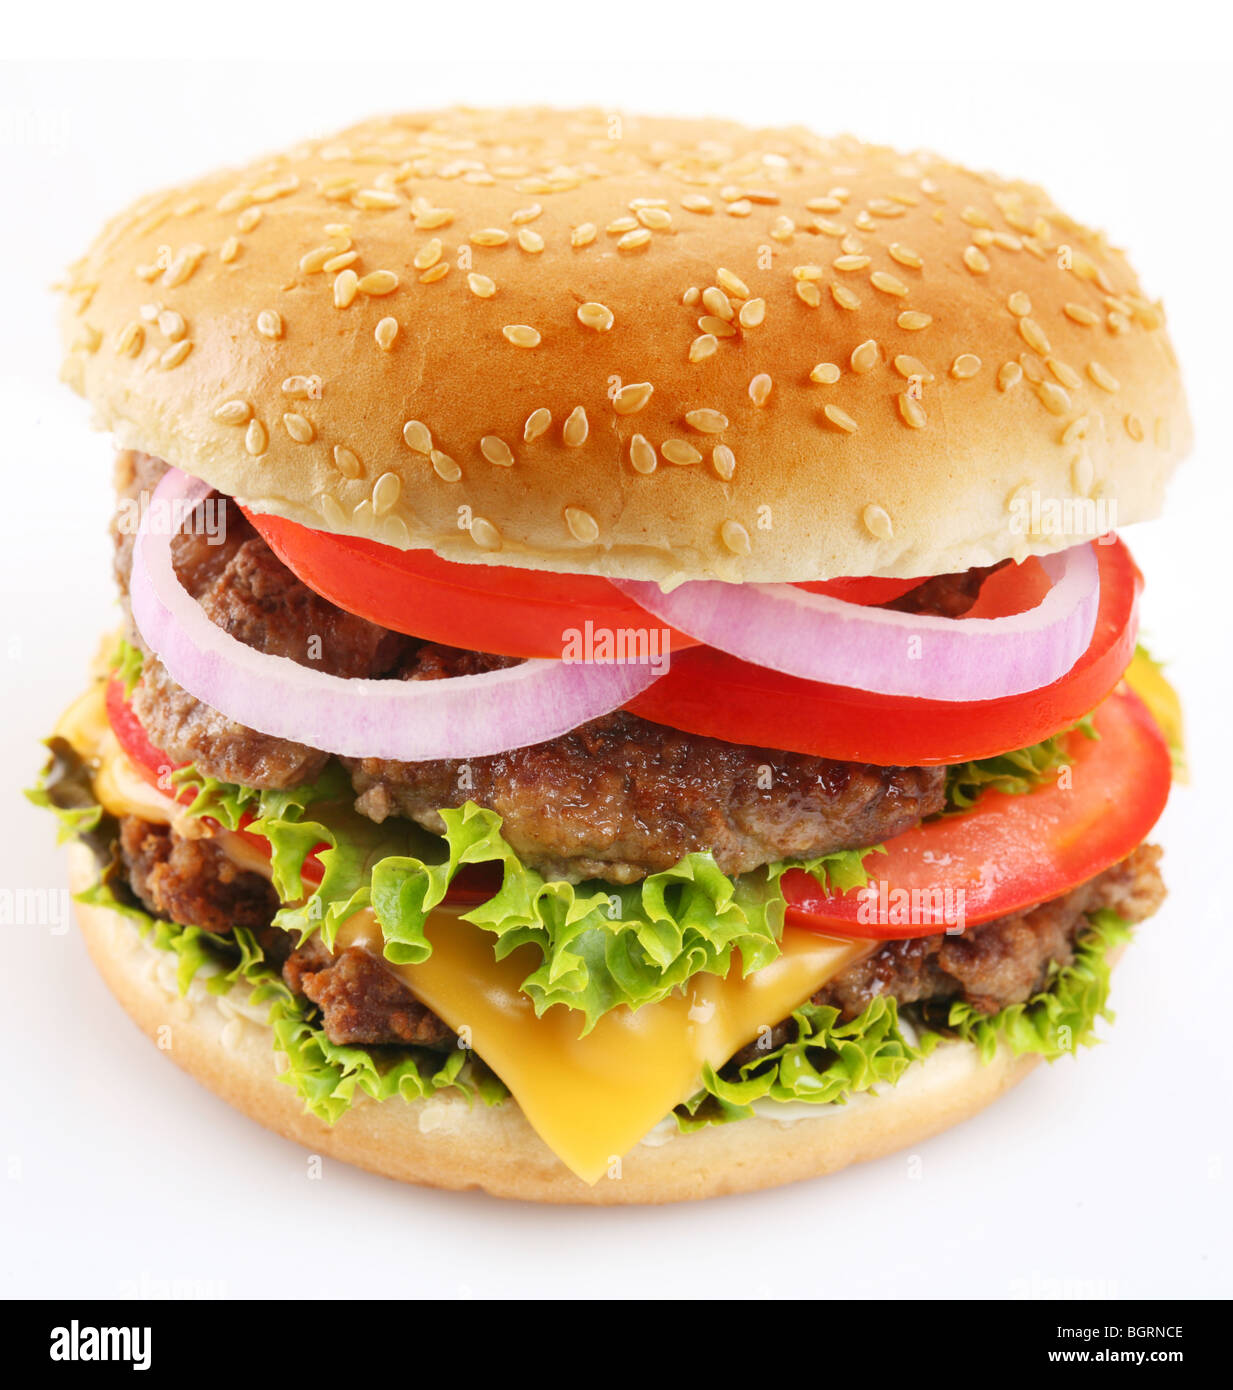 Cheeseburger on a white background Stock Photo